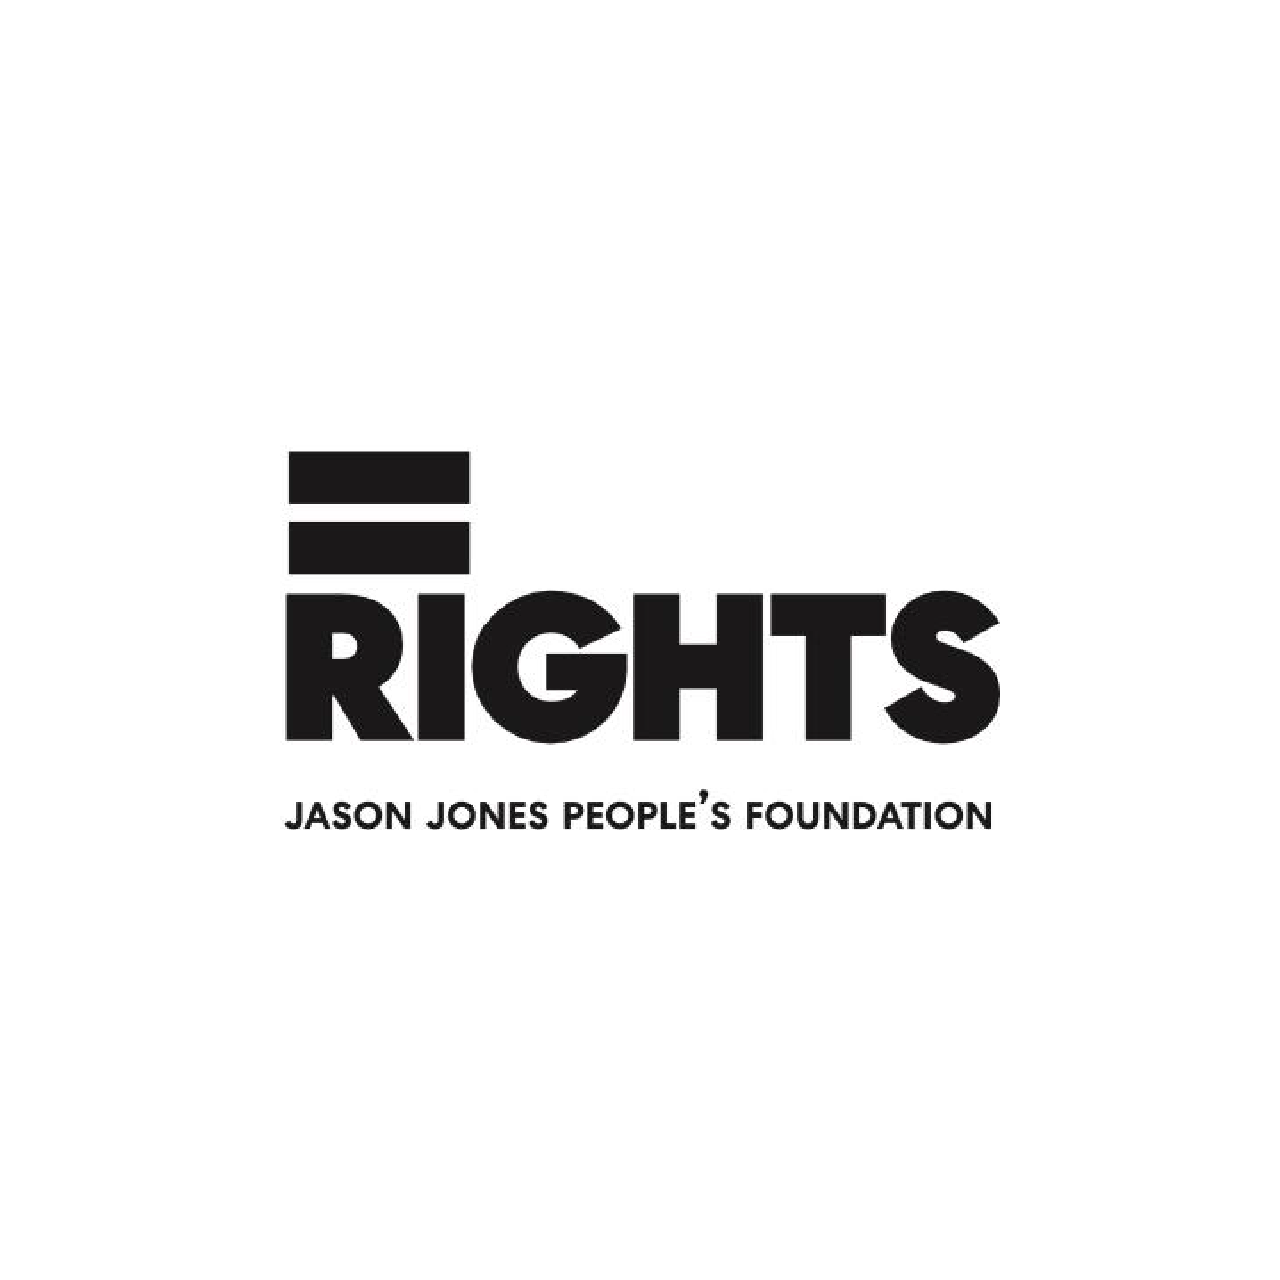 Jason Jones People's Foundation